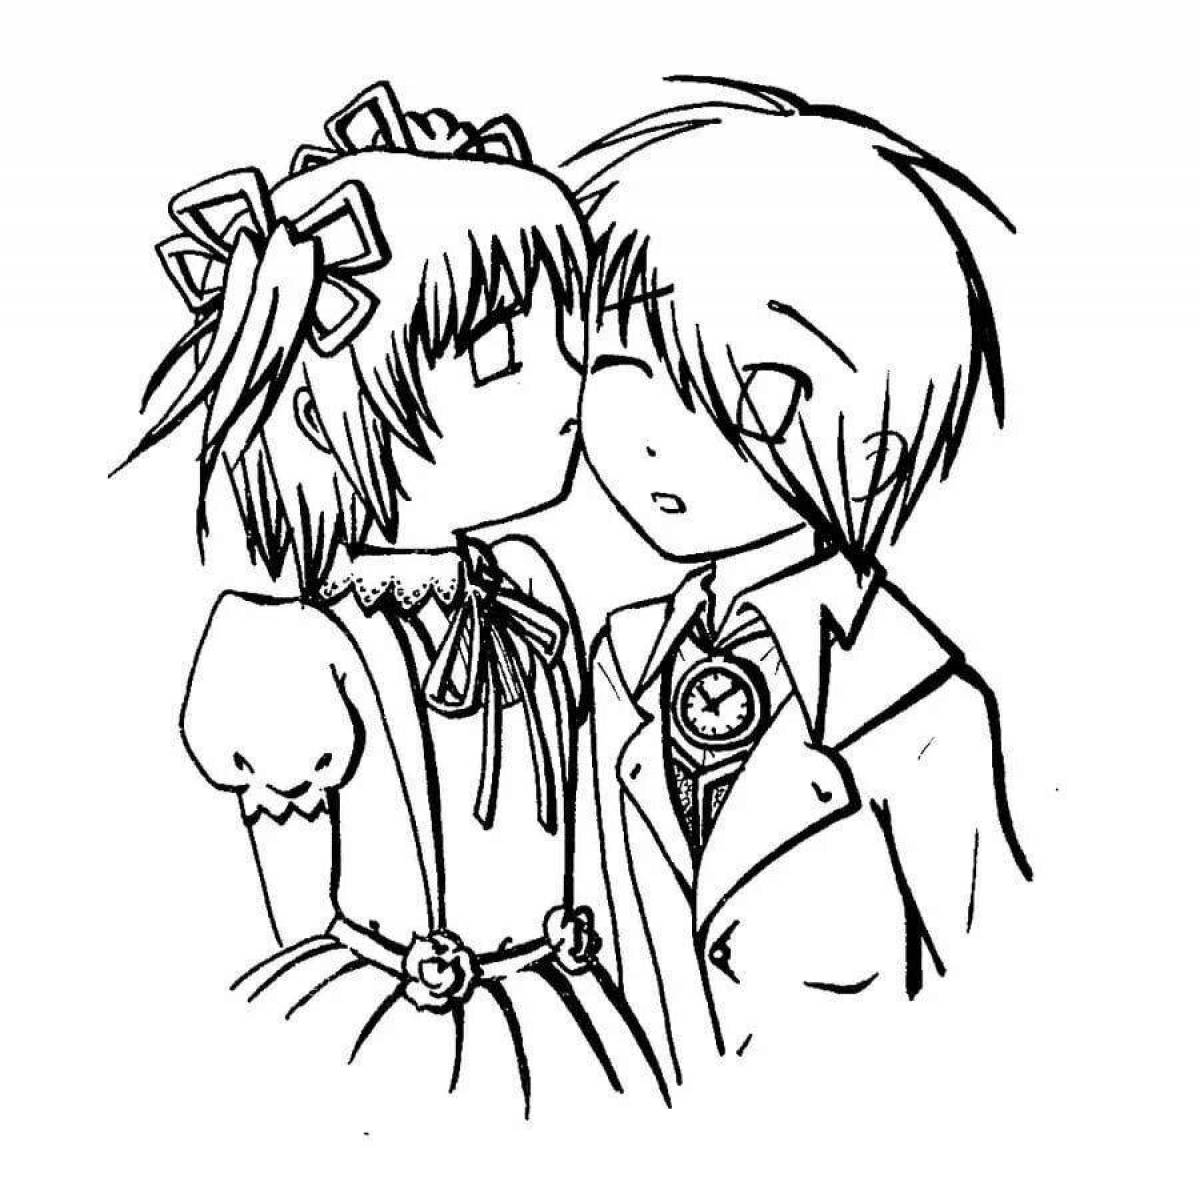 Joyful anime couple coloring page